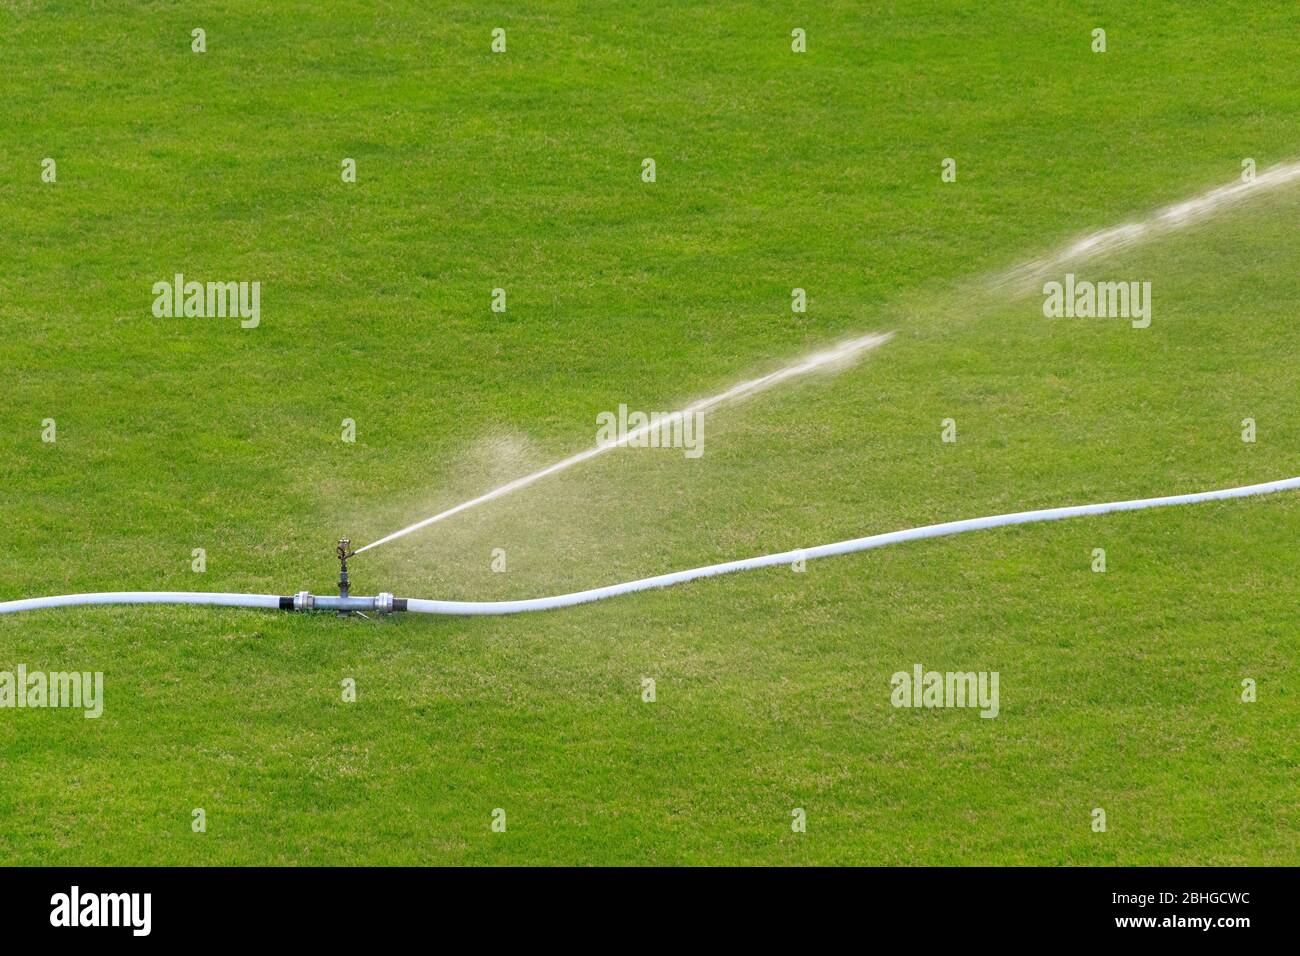 Sprinkler watering football field -Fotos und -Bildmaterial in hoher  Auflösung – Alamy